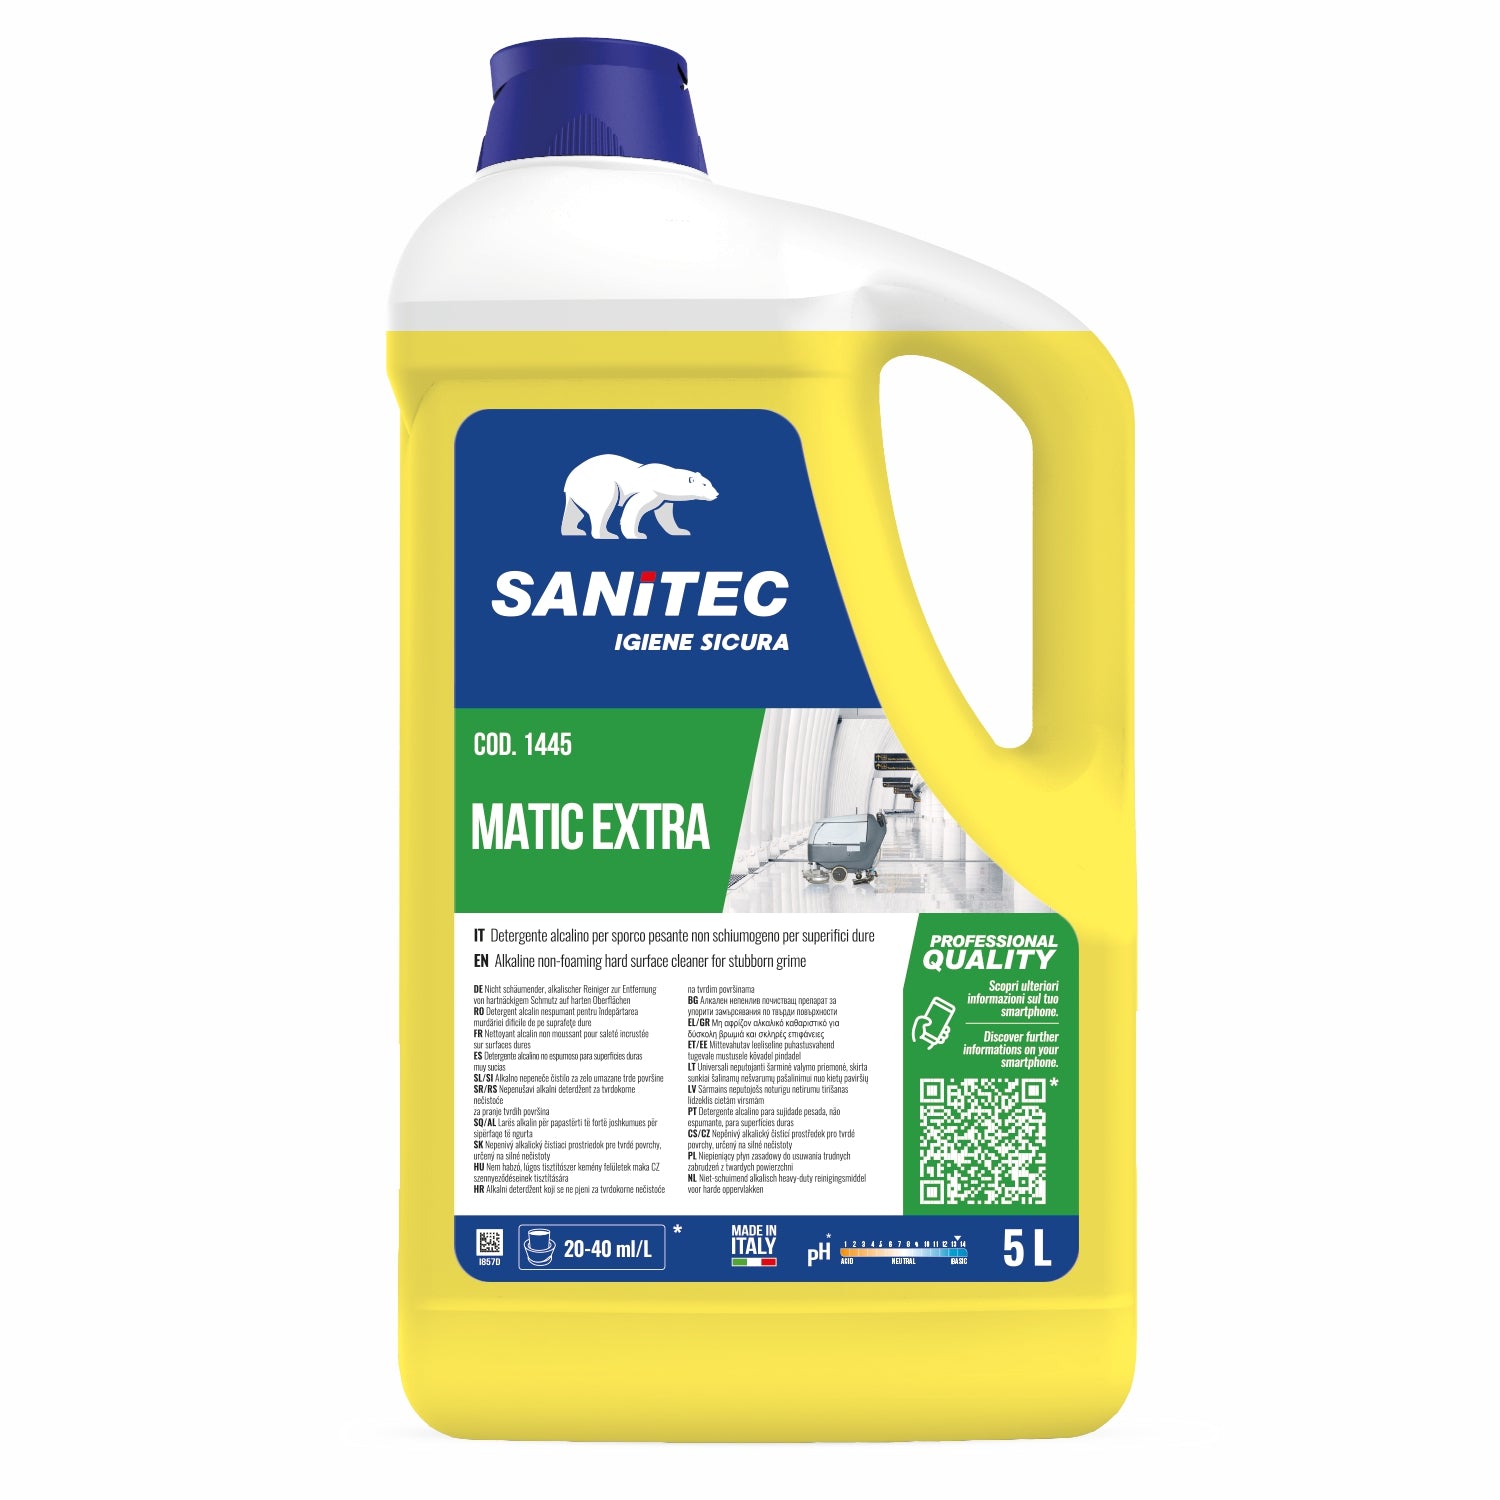 Detergente pavimenti Matic extra alcalino per sporco pesante non schiumogeno per superfici dure 5 LT sanitec 1445